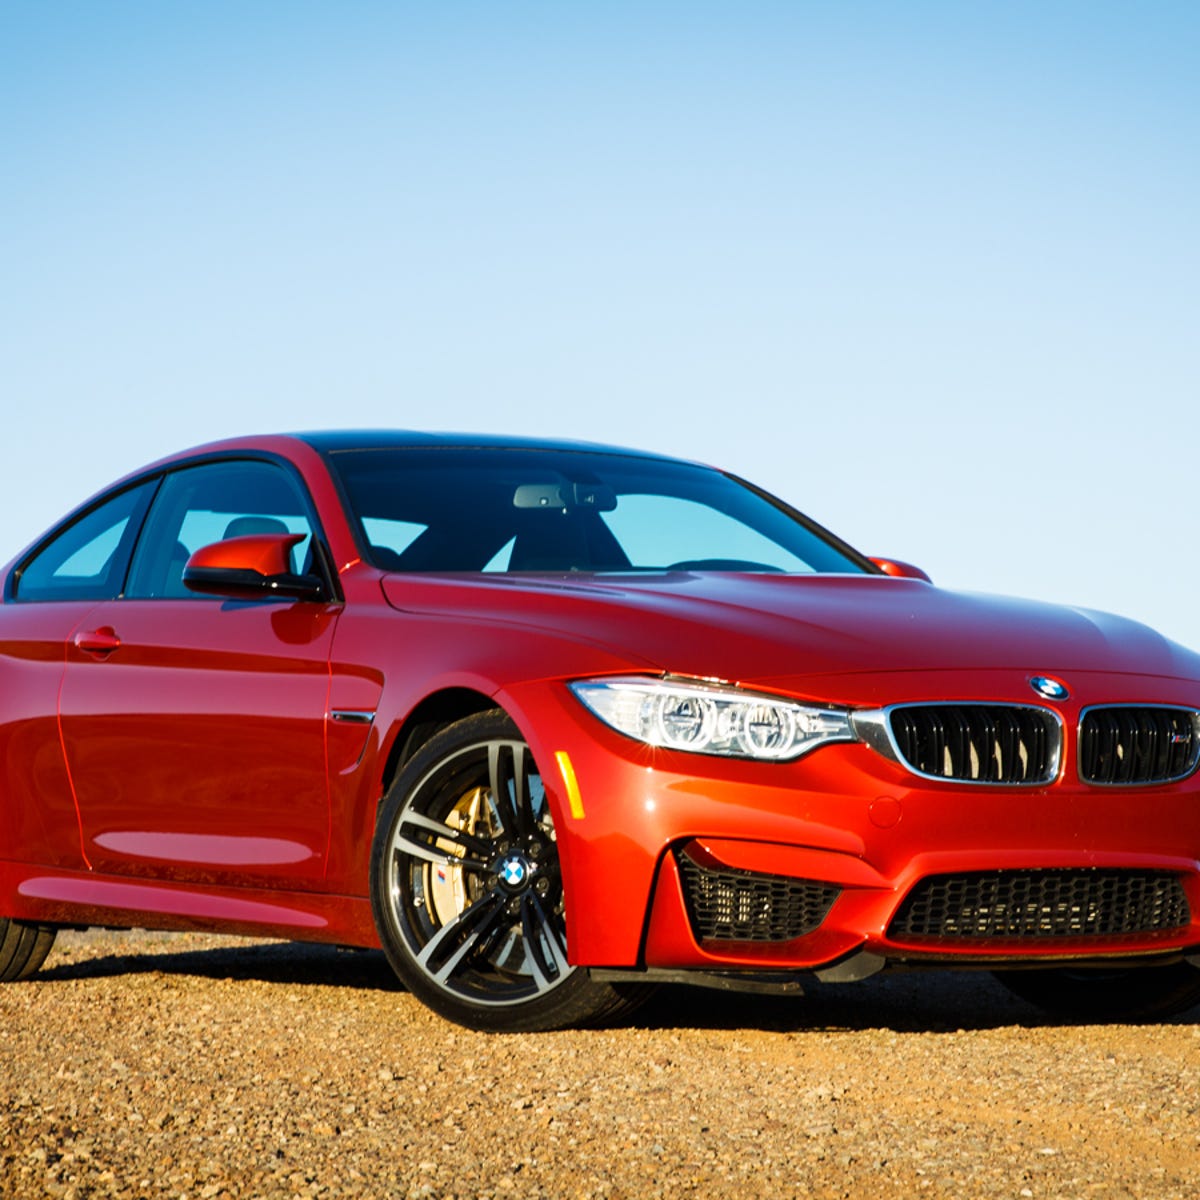 2015 BMW M4 review: Pricey M4 advances BMW's legendary sports performance -  CNET